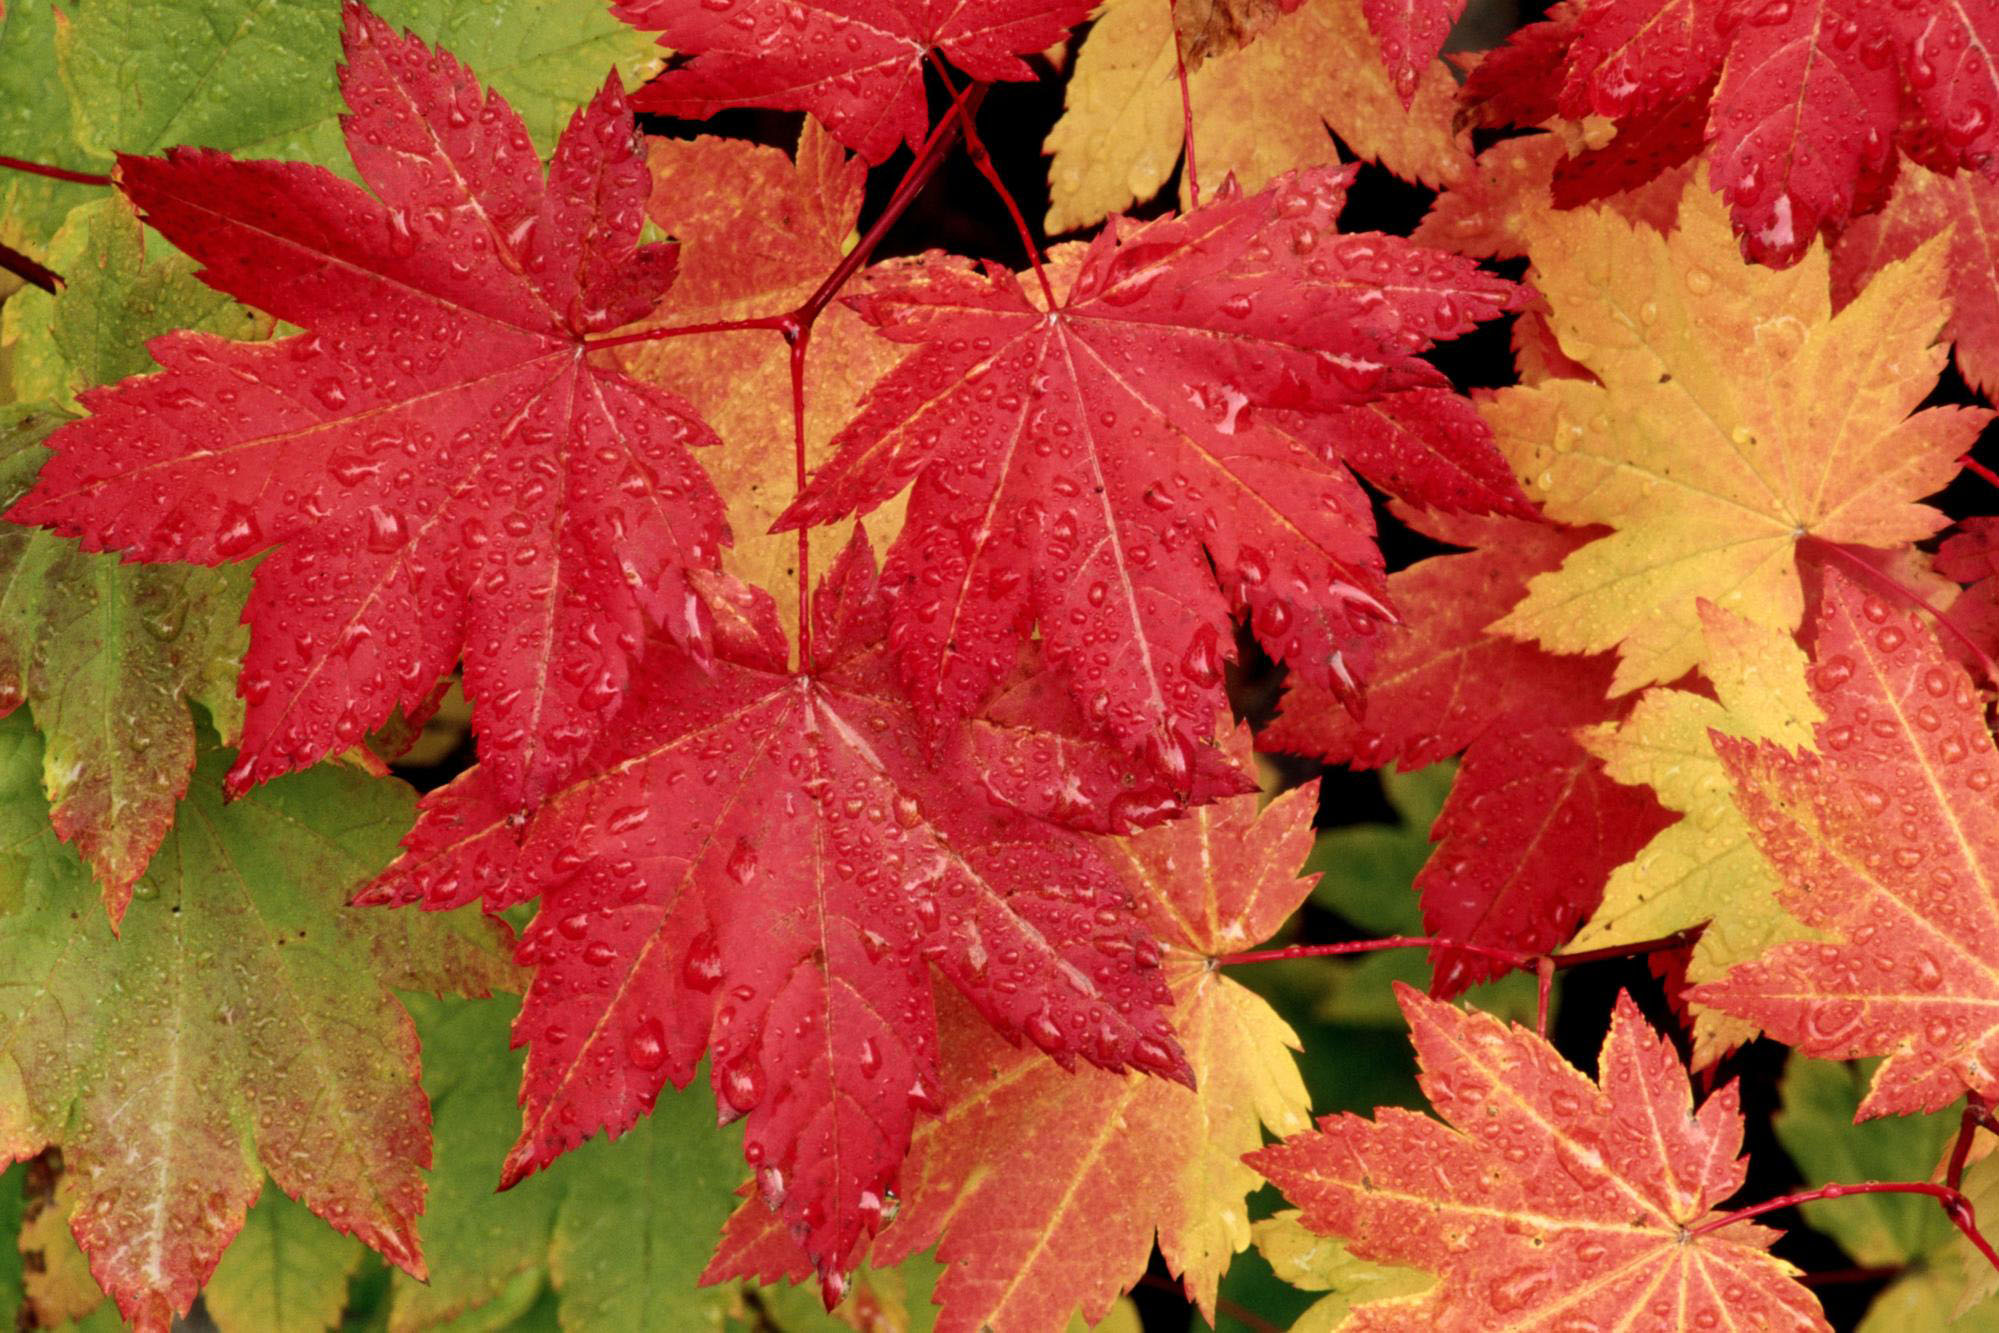   wallpapers autumn leaf fall leaves trees desktop hd desktophtml